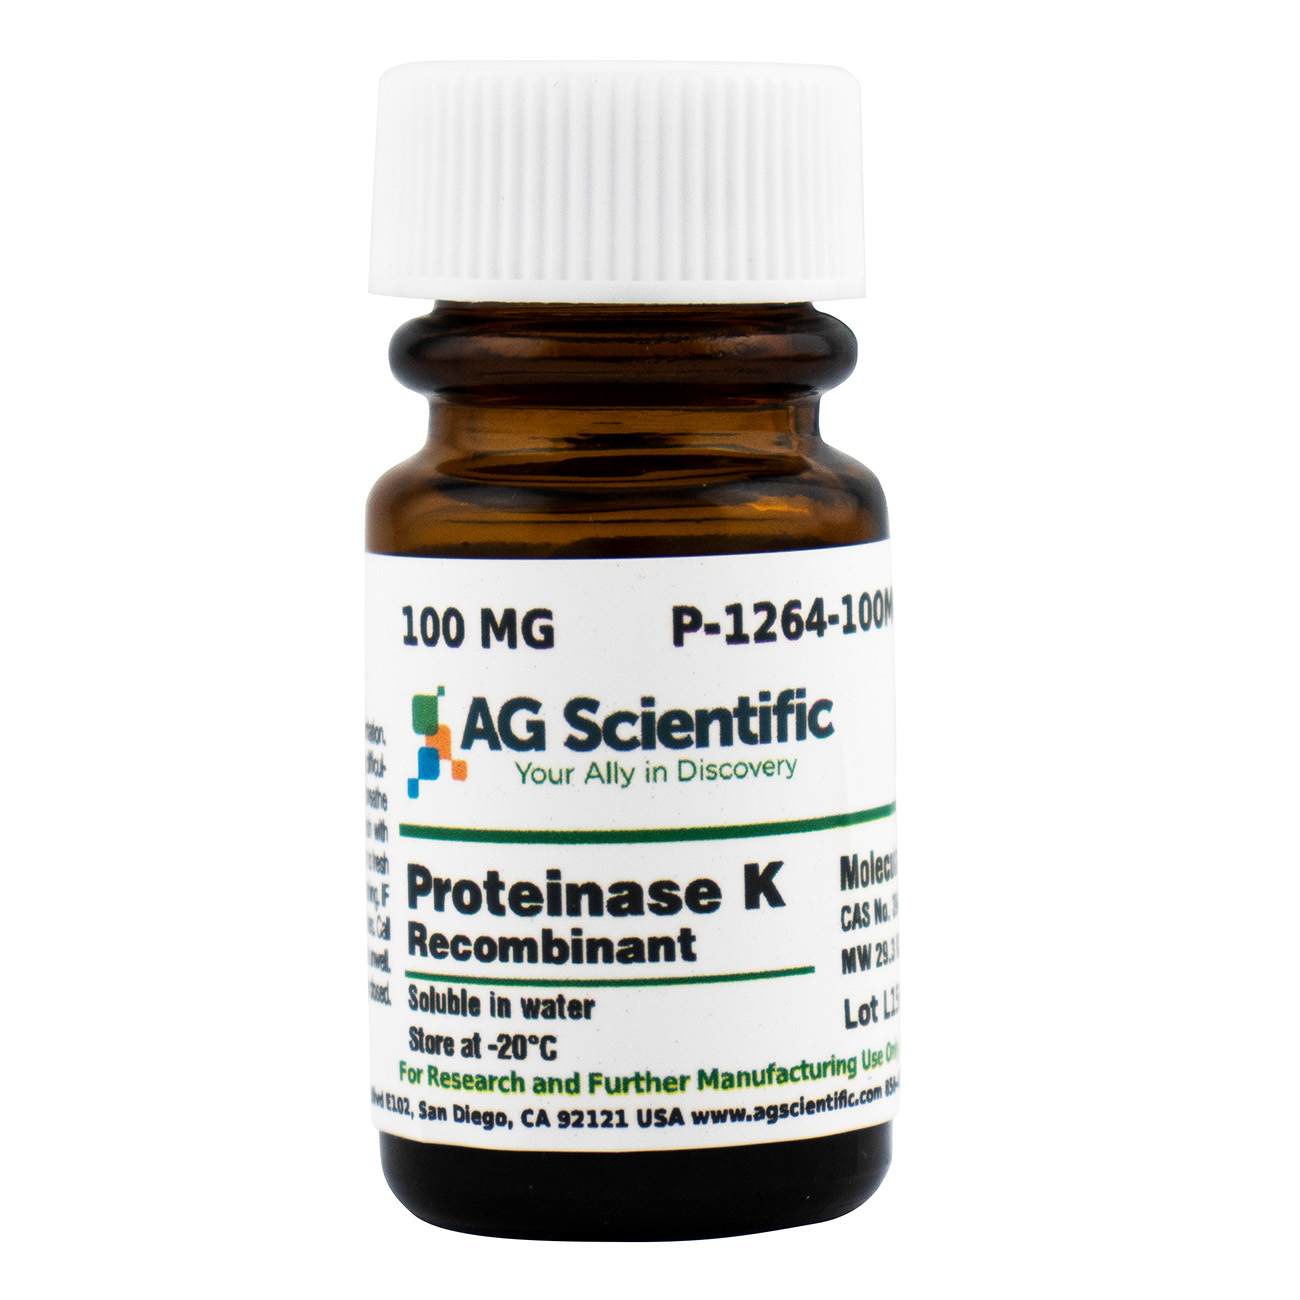 Proteinase K (Recombinant), 100 MG